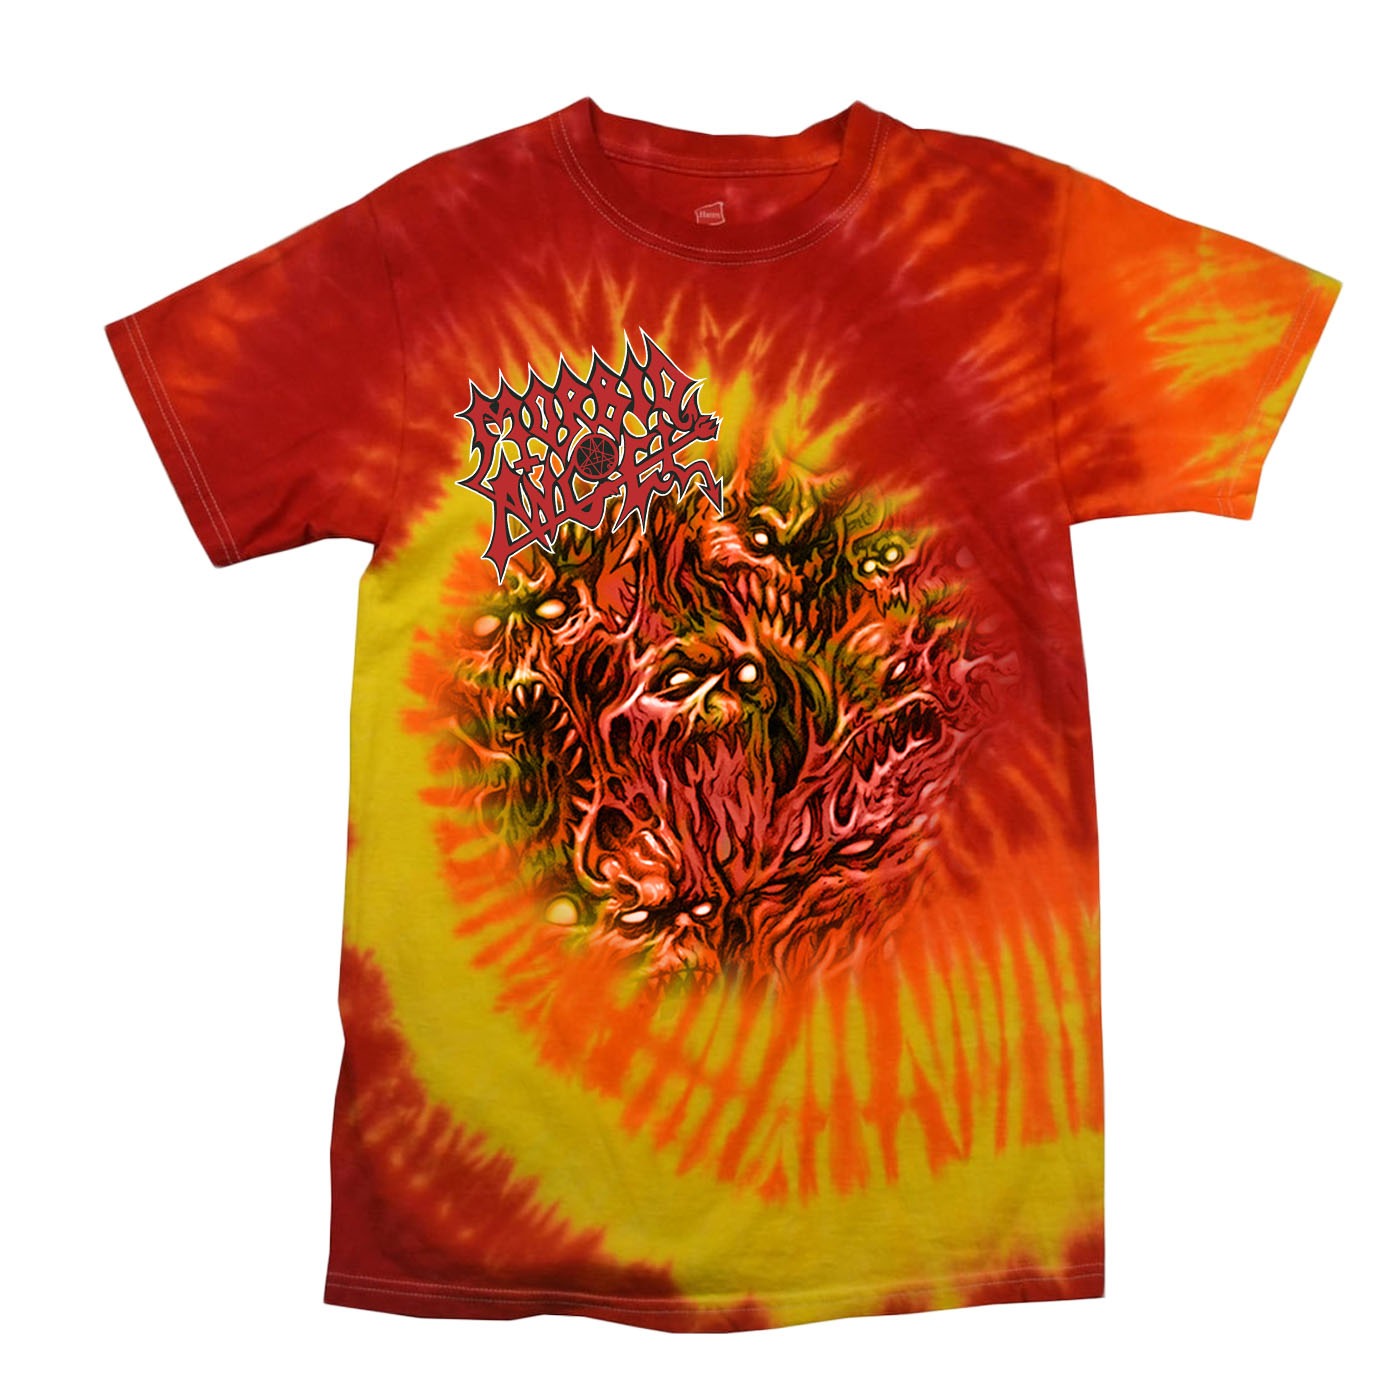 Morbid Angel "Altars Of Madness" Red Tie Dye T shirt